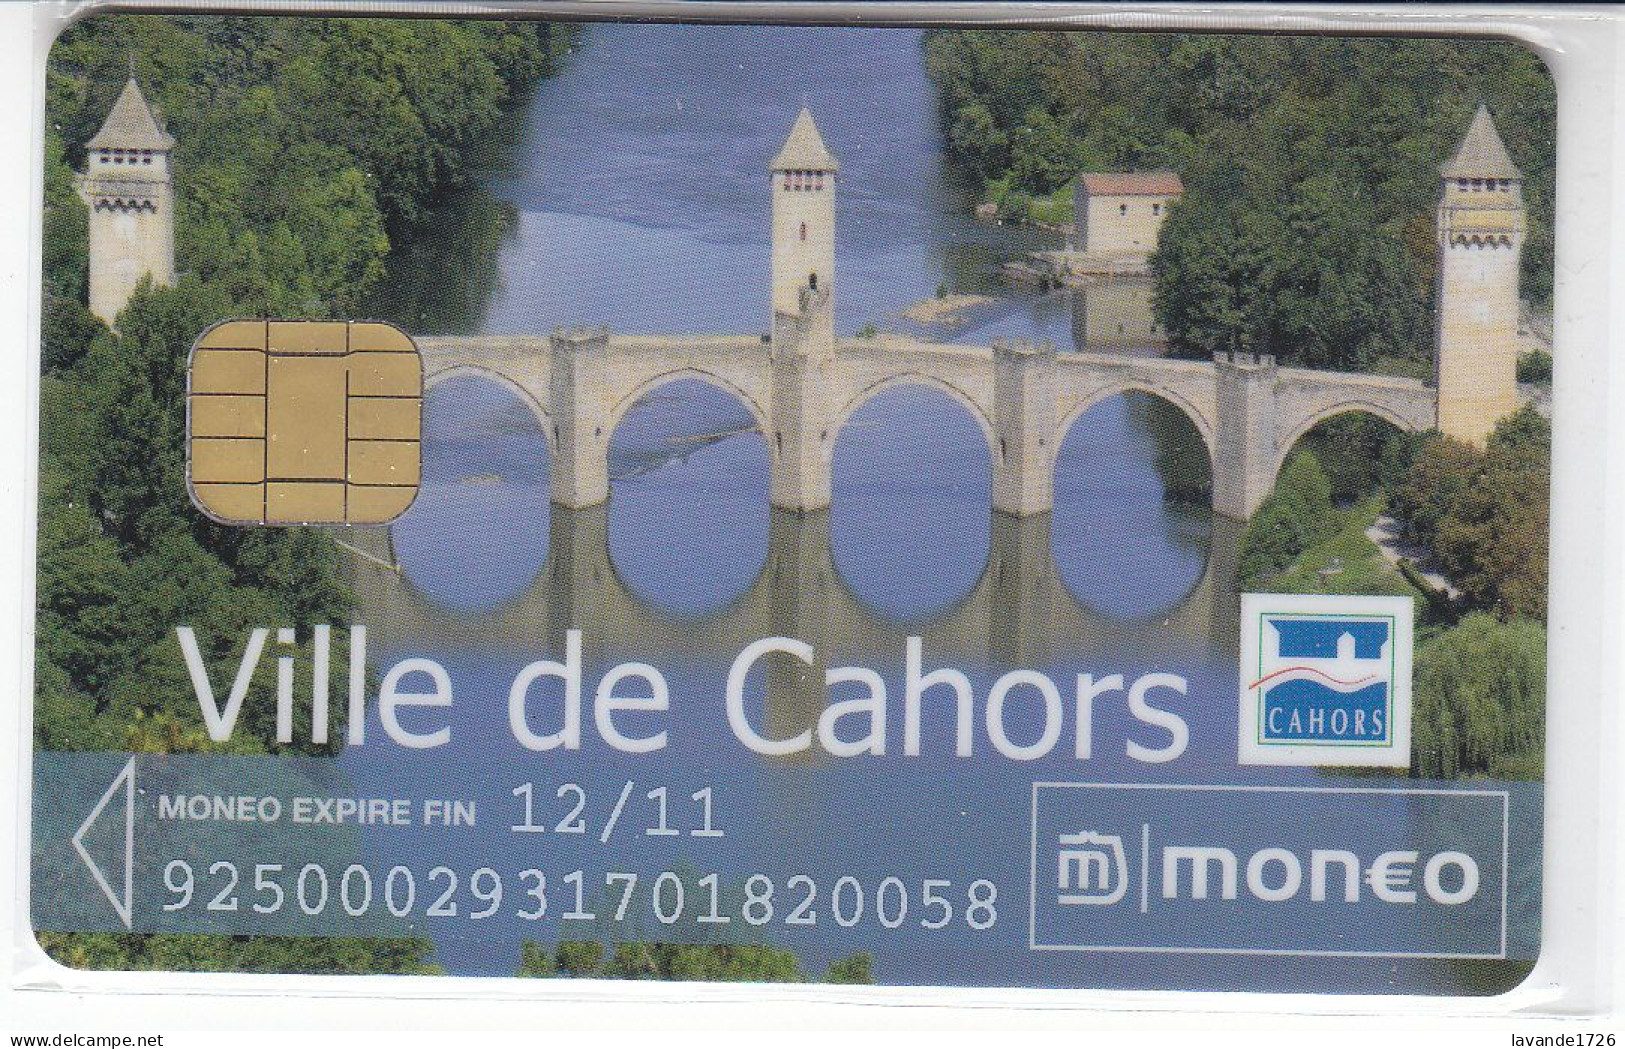 Carte MONEO   CAHORS  Date 2011 - PIAF Parking Cards